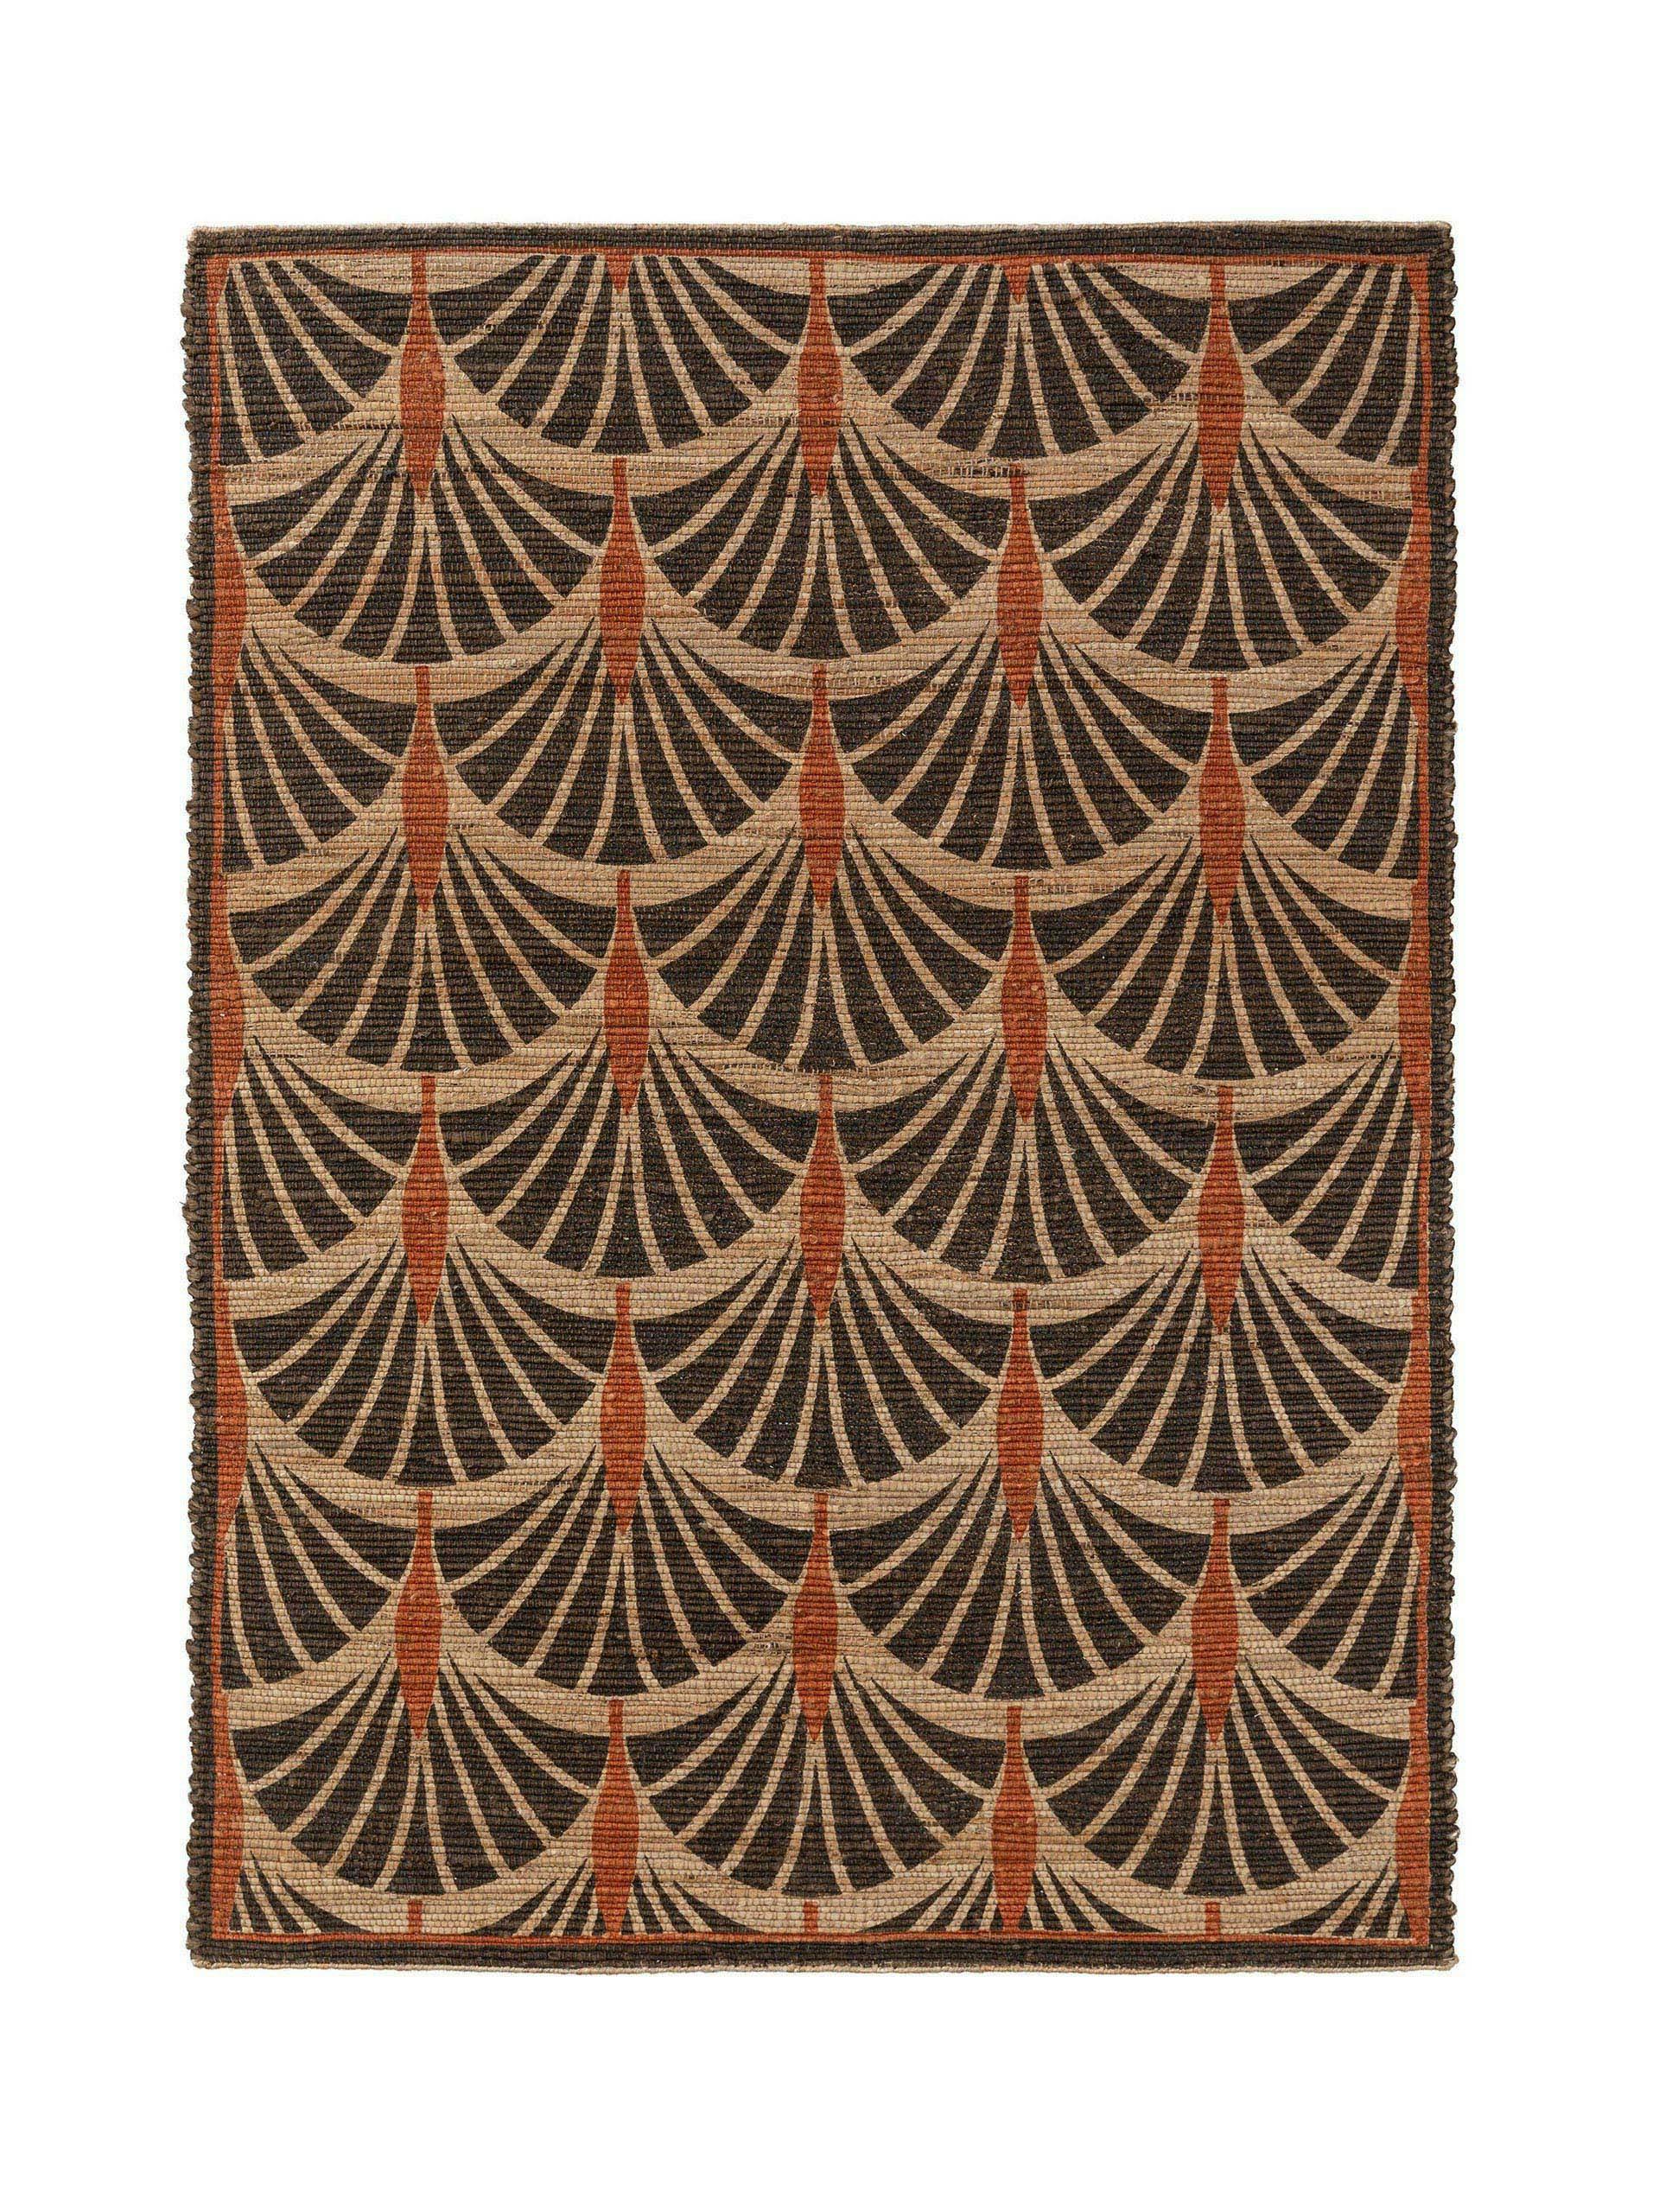 Art Deco patterned jute rug